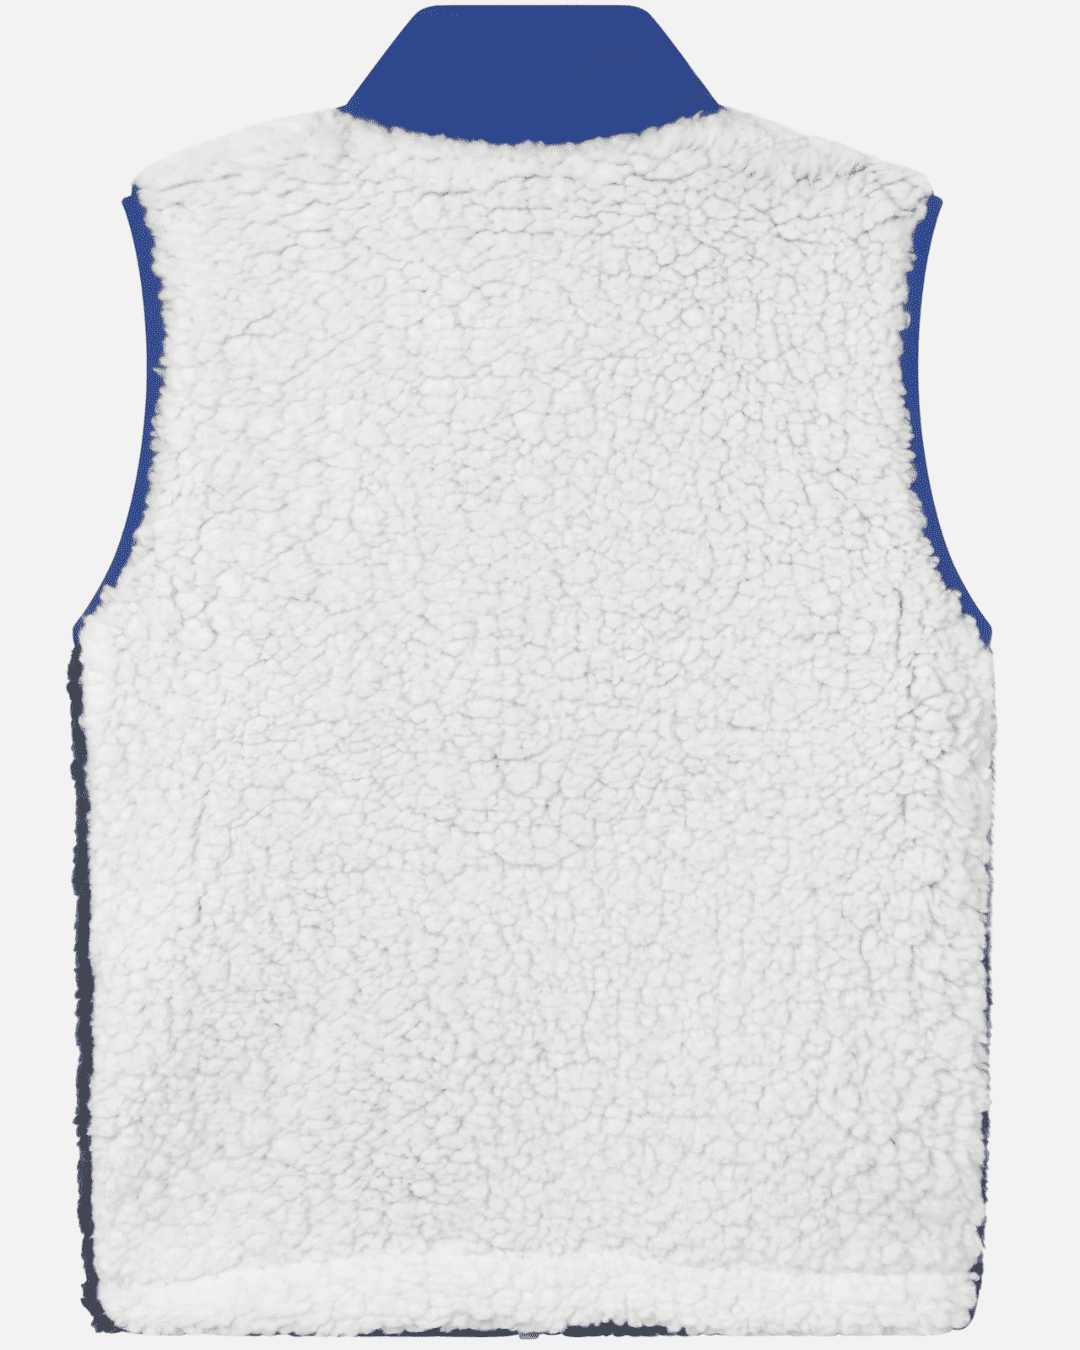 Nike Sherpa Vest Kids Jacket - White/Blue